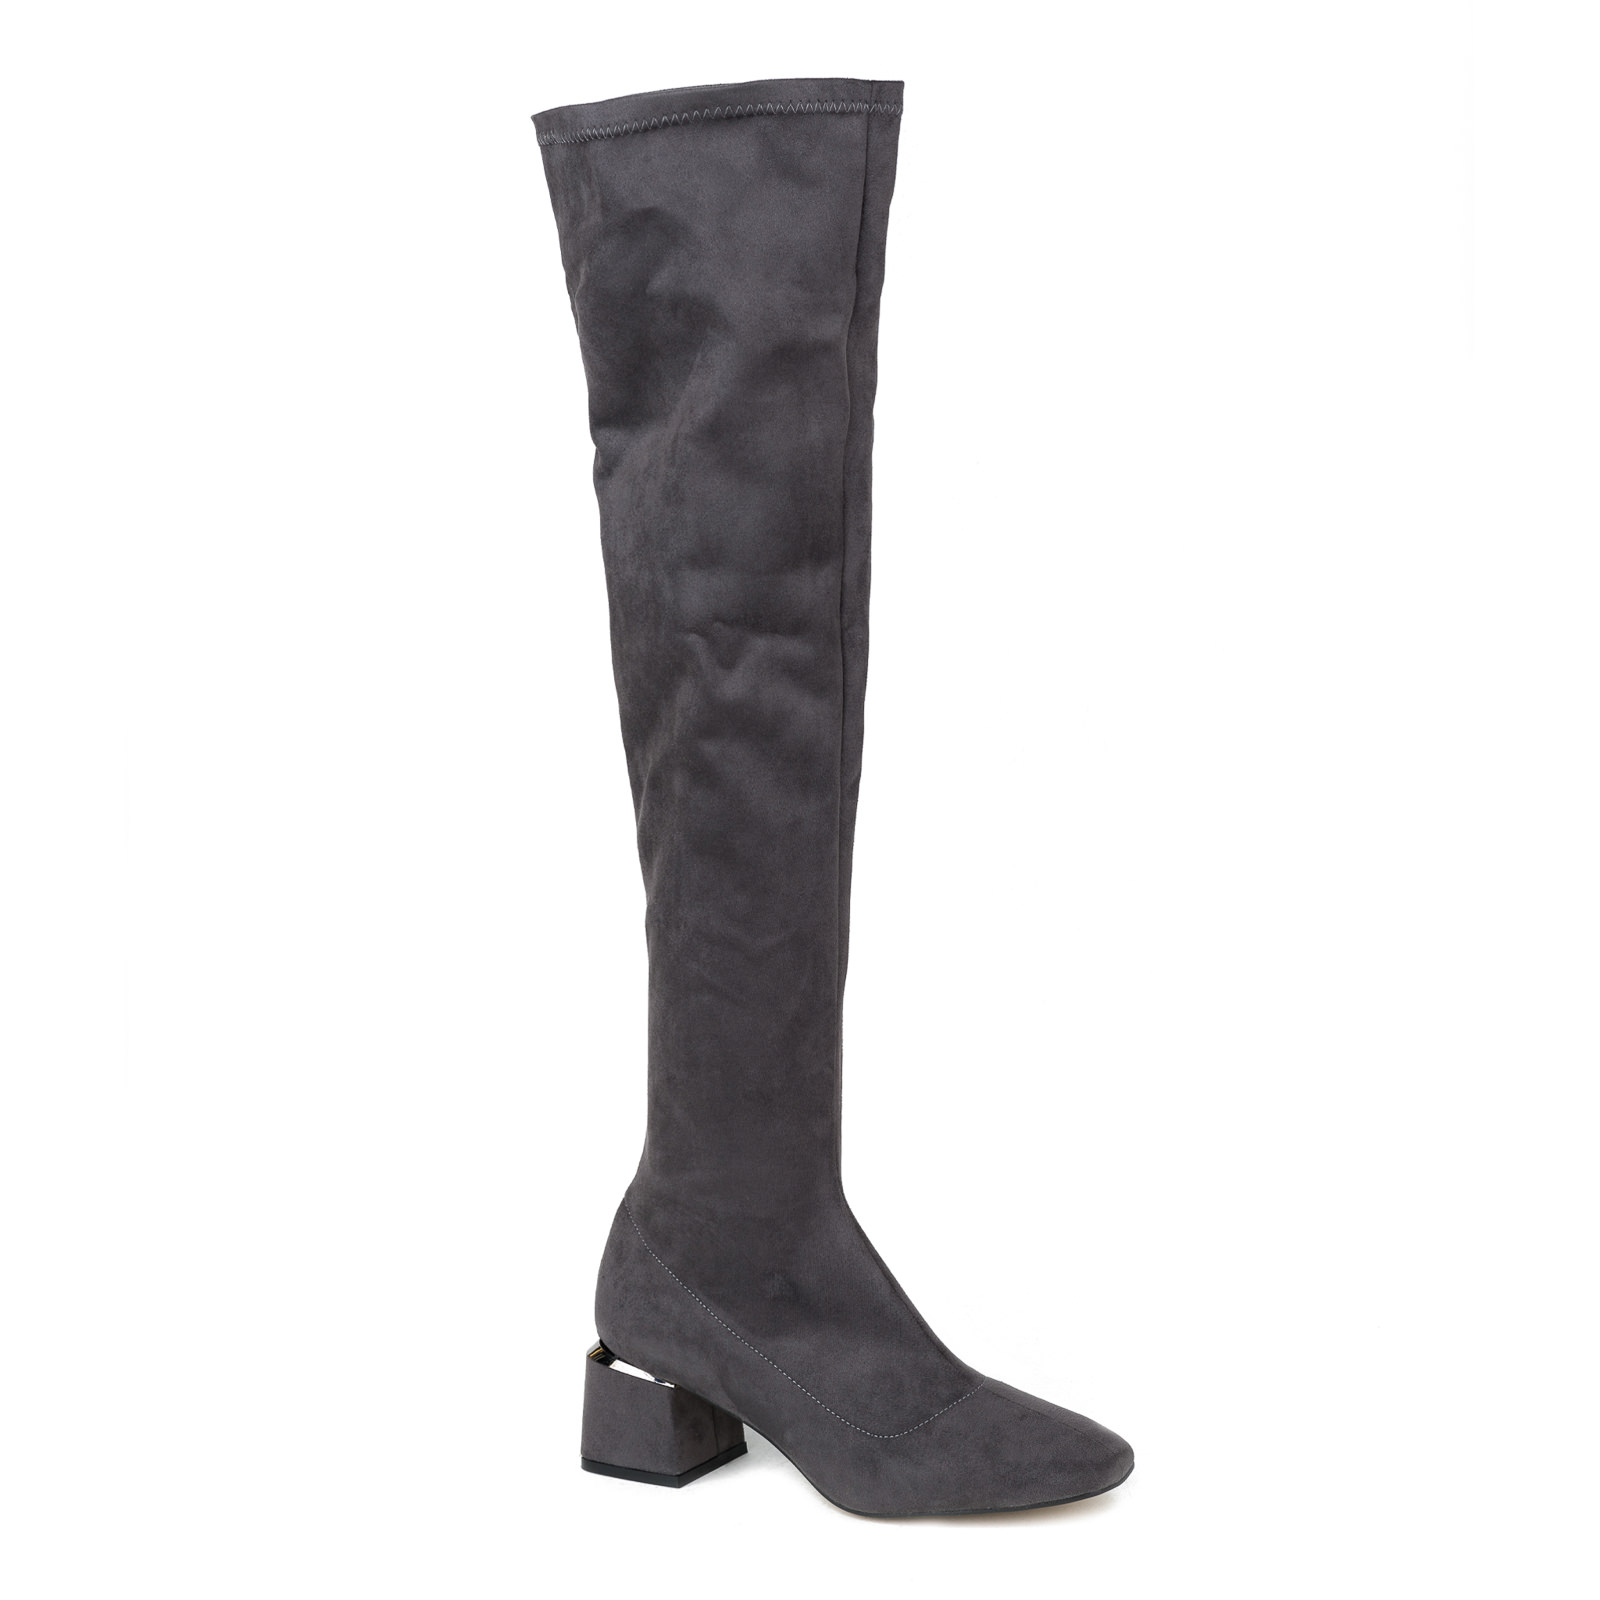 Women boots B511 - GREY